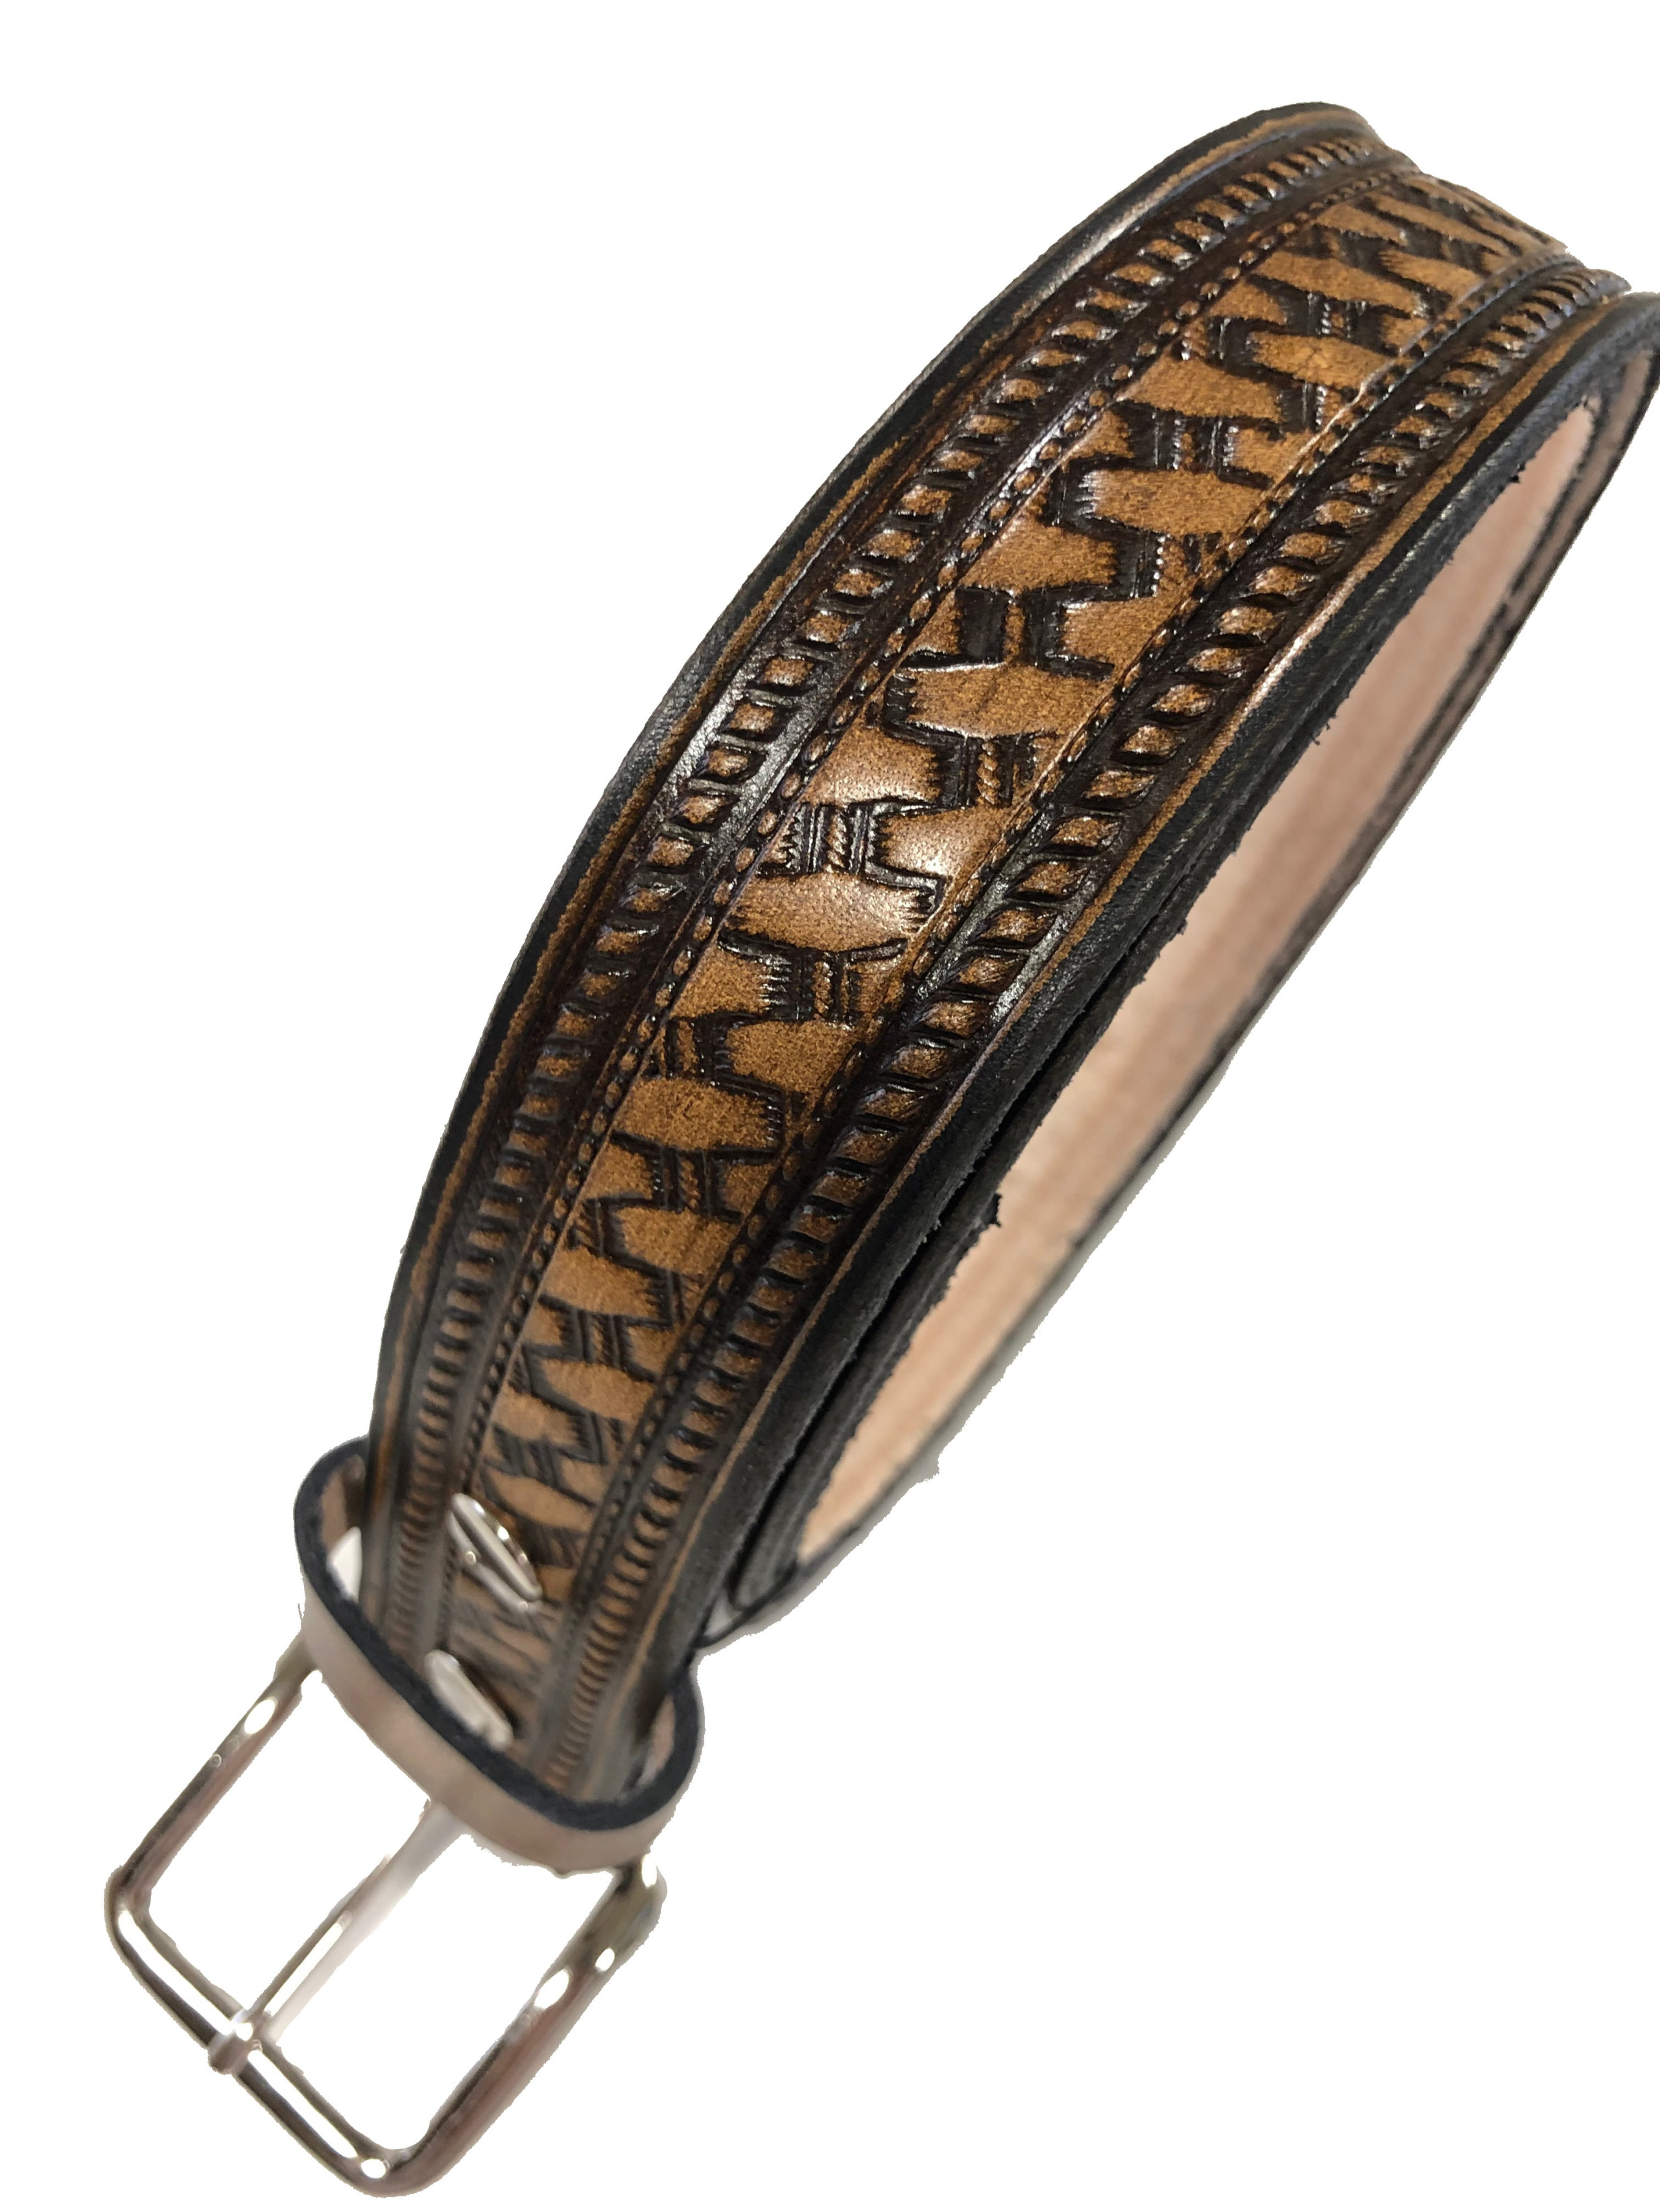 Half Basket Weave Design Handmade Mens Leather Belt 1.5&quot; wide Work Casual Western Color Cocoa Brown